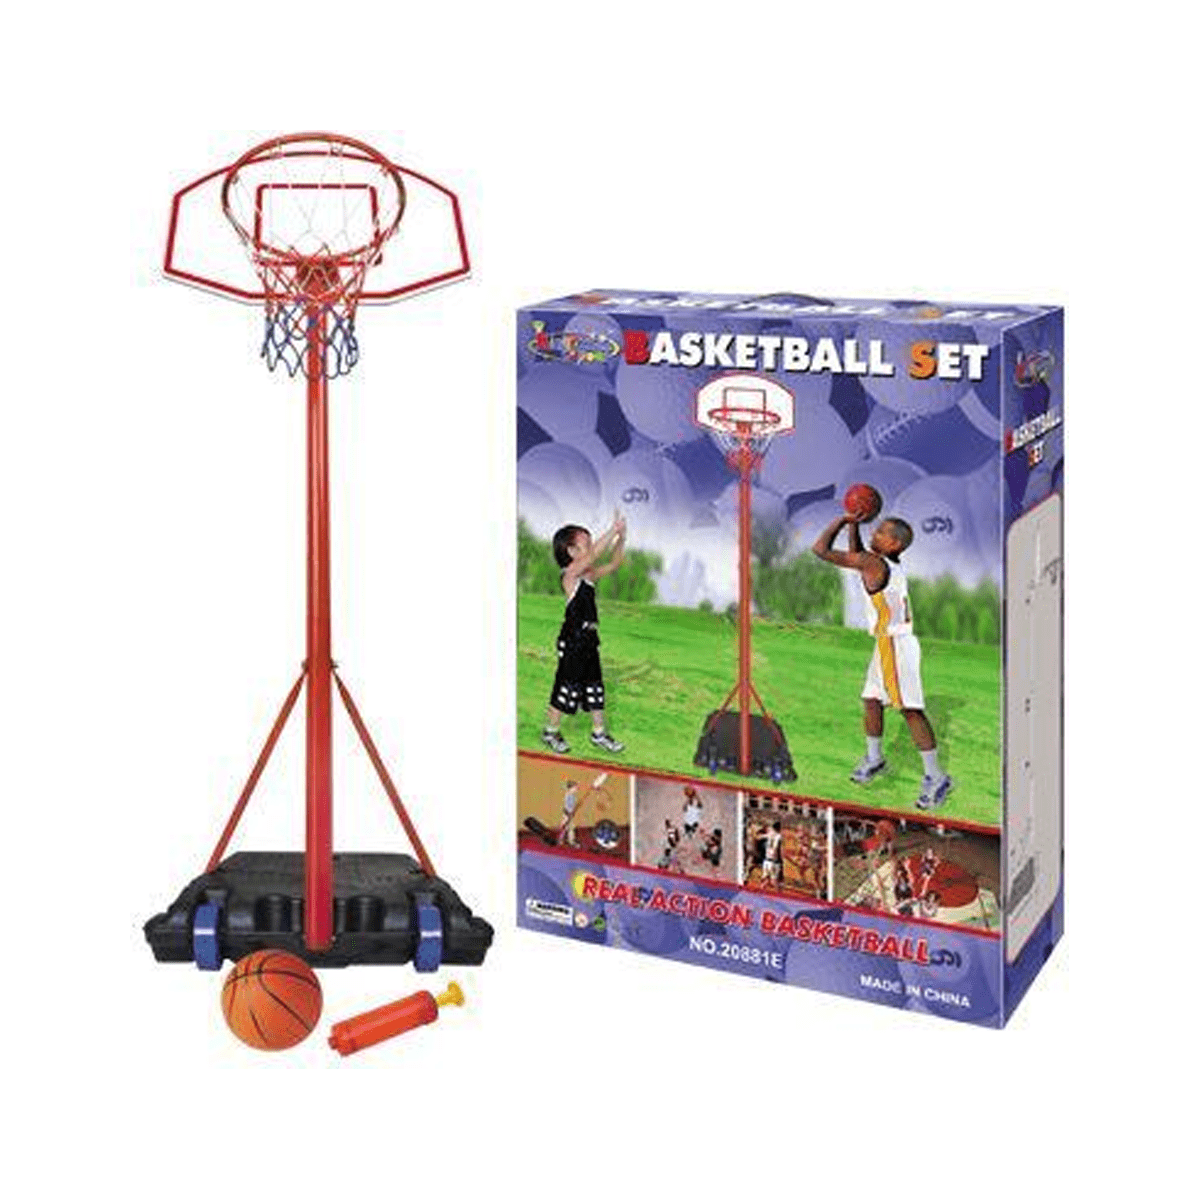 Adjustable basketball set - SquareDubai